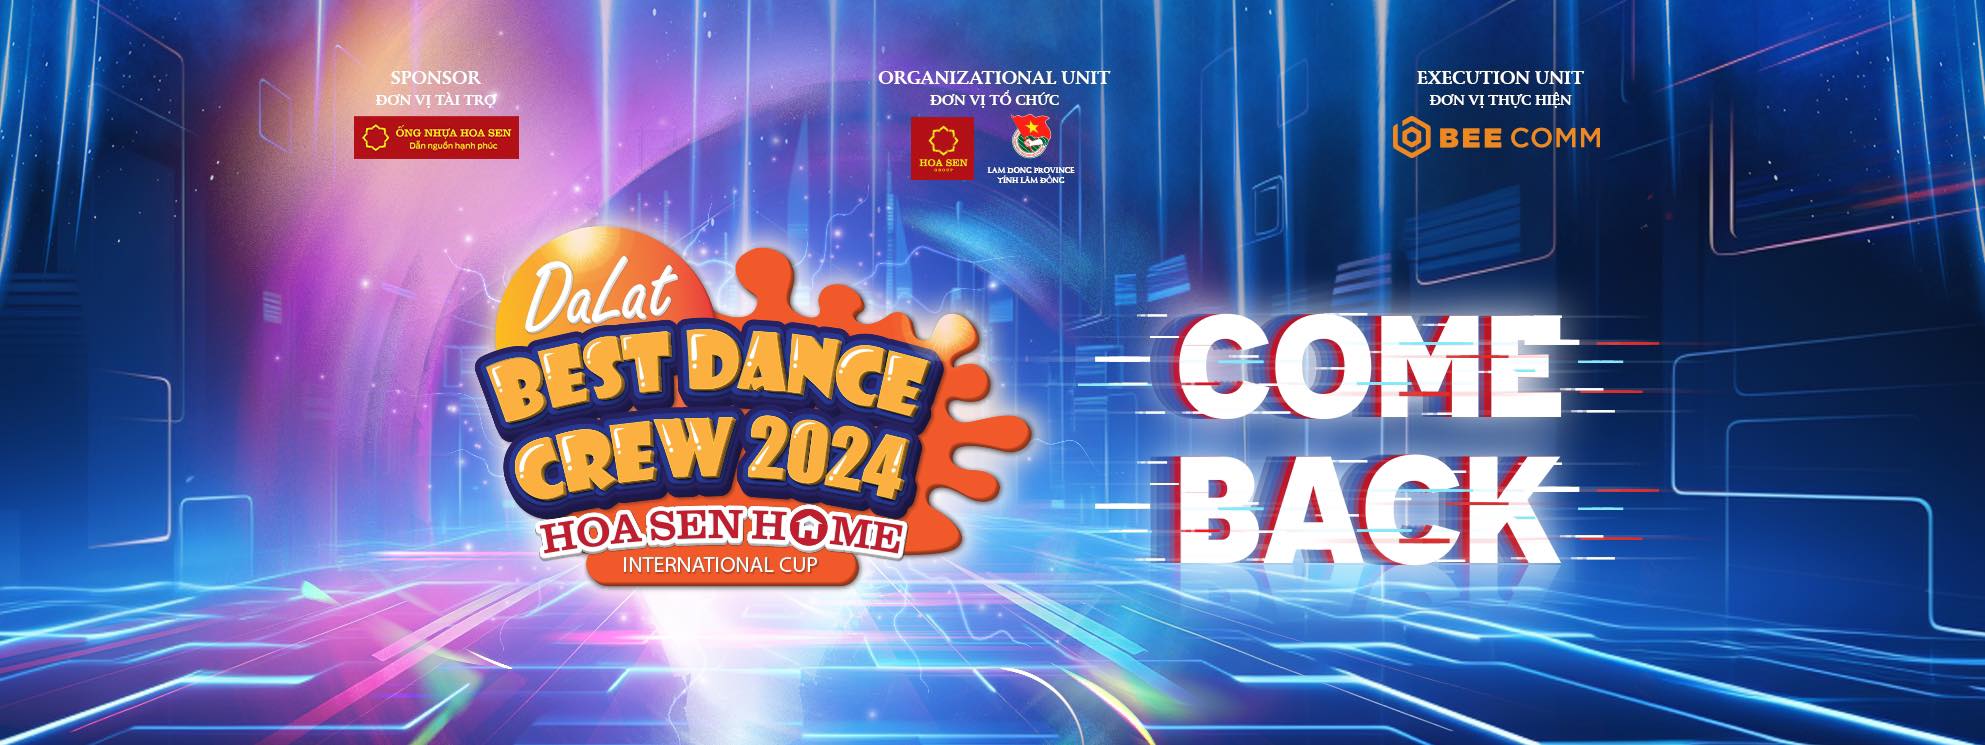 Dalat Best Dance Crew 2024 Hoa Sen Home International Cup quay trở lại